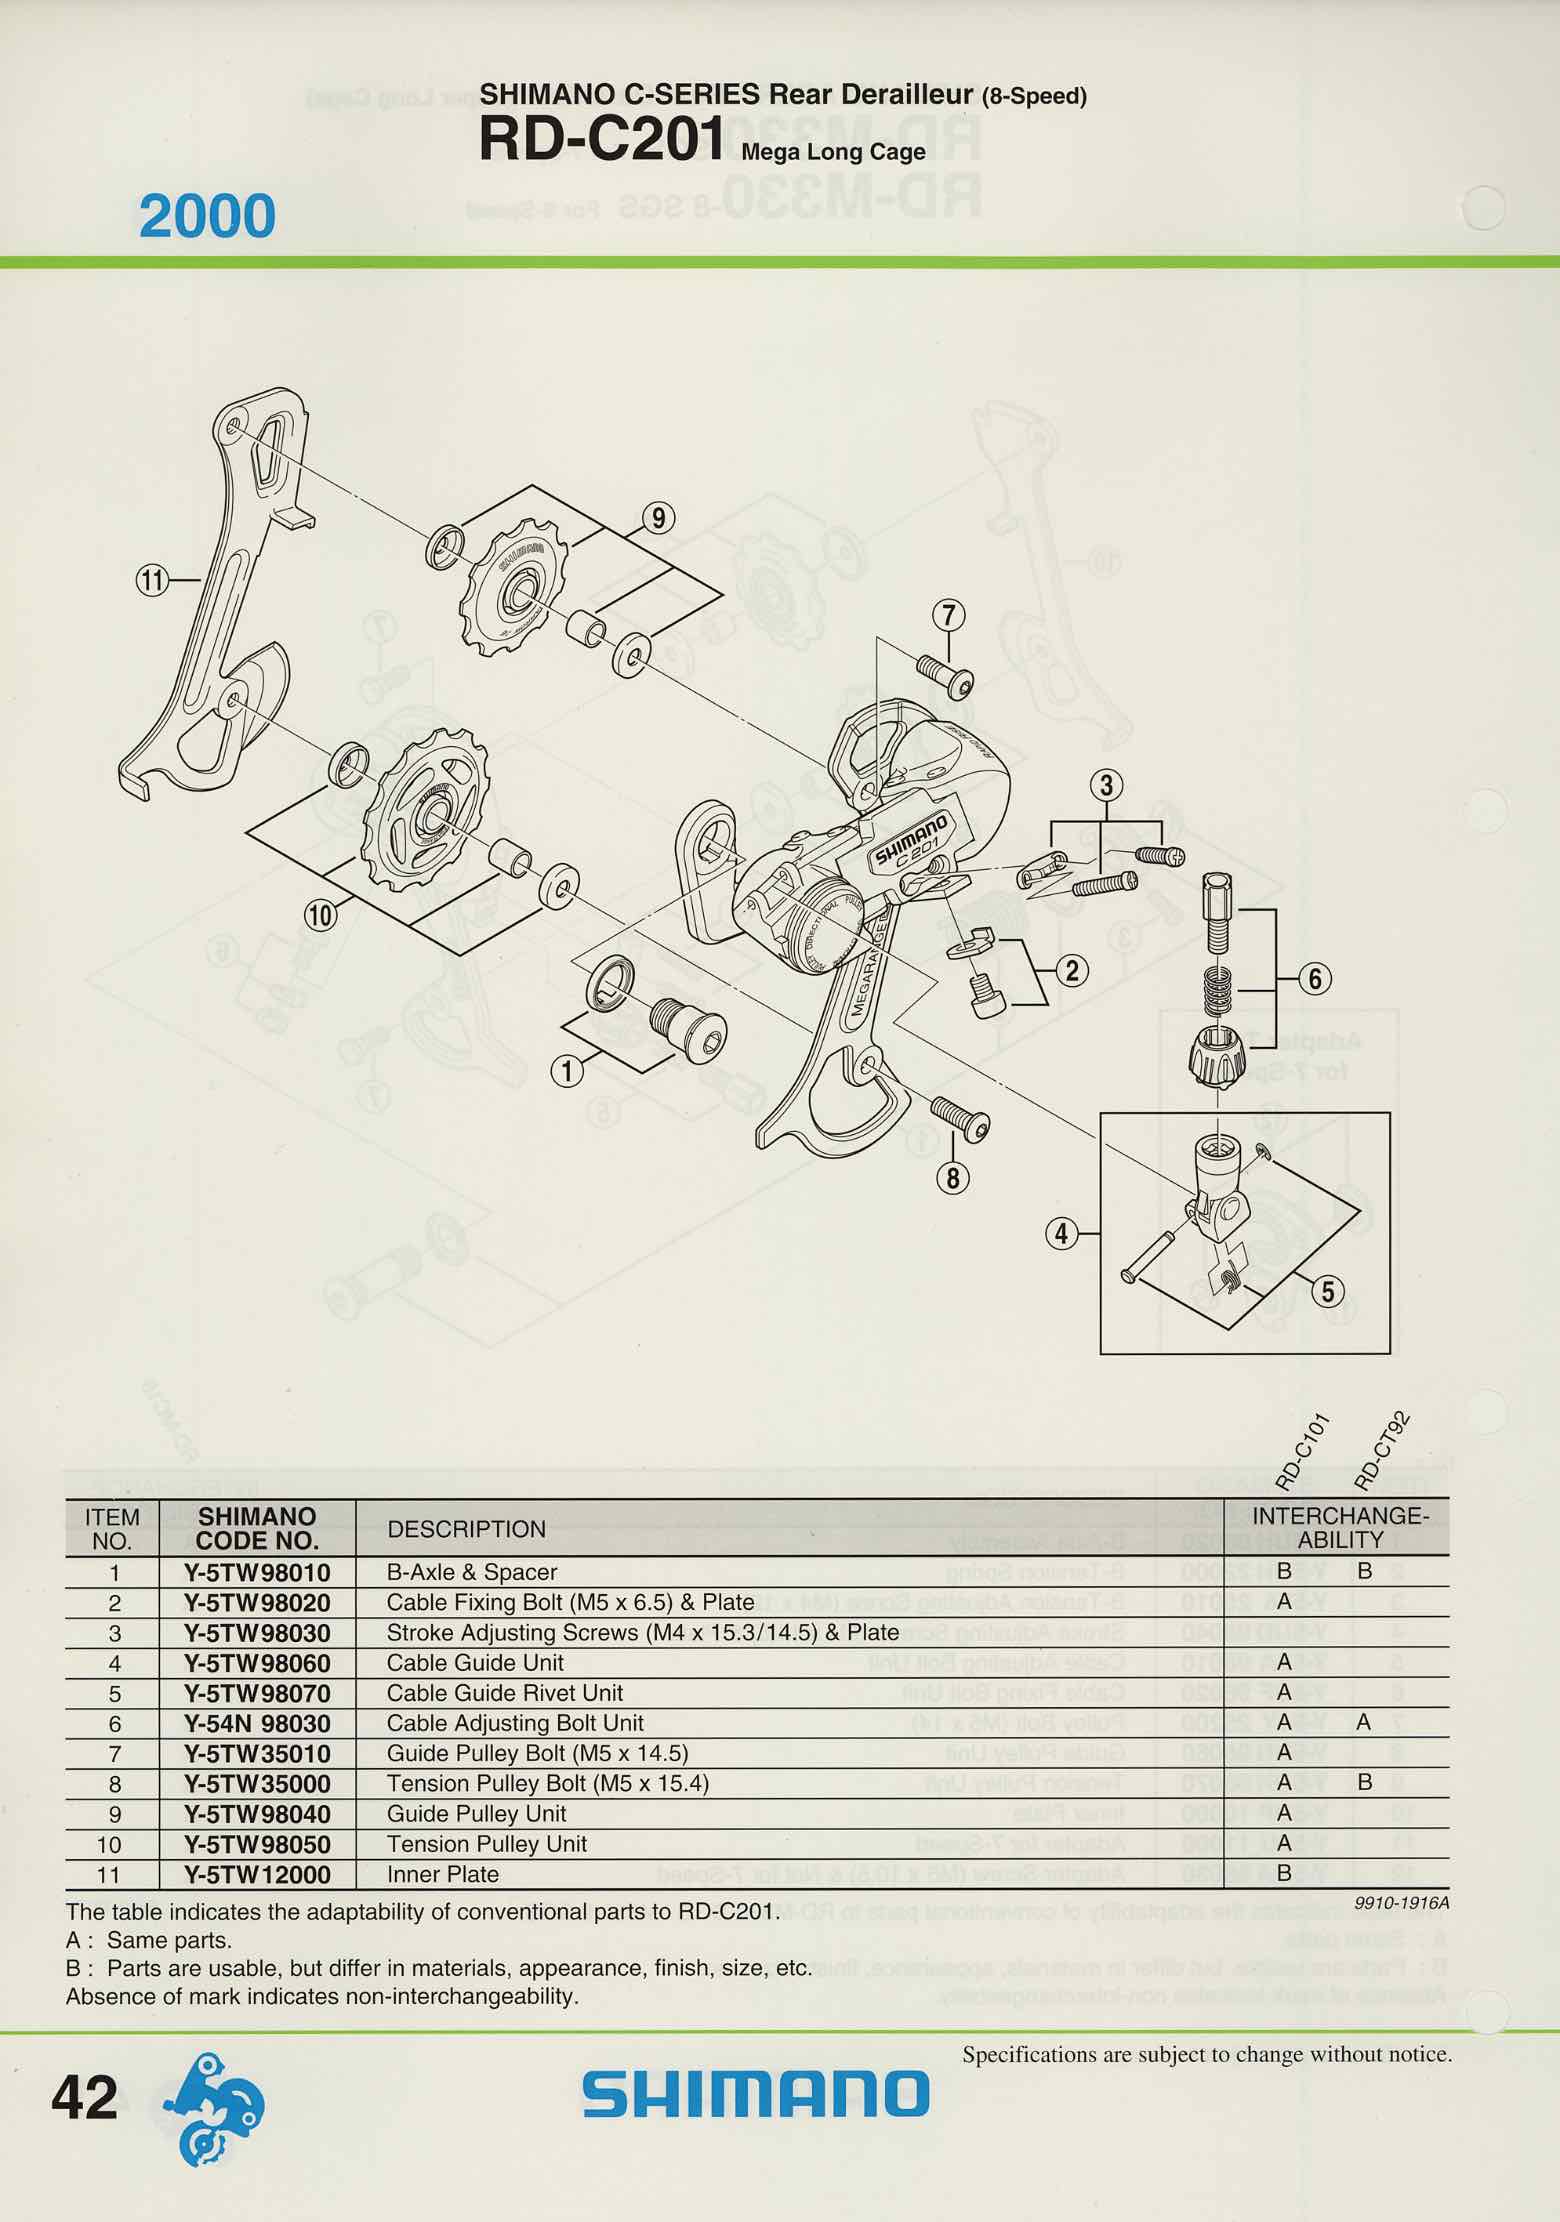 Shimano Spare Parts Catalogue - 1994 to 2004 s5 p42 main image